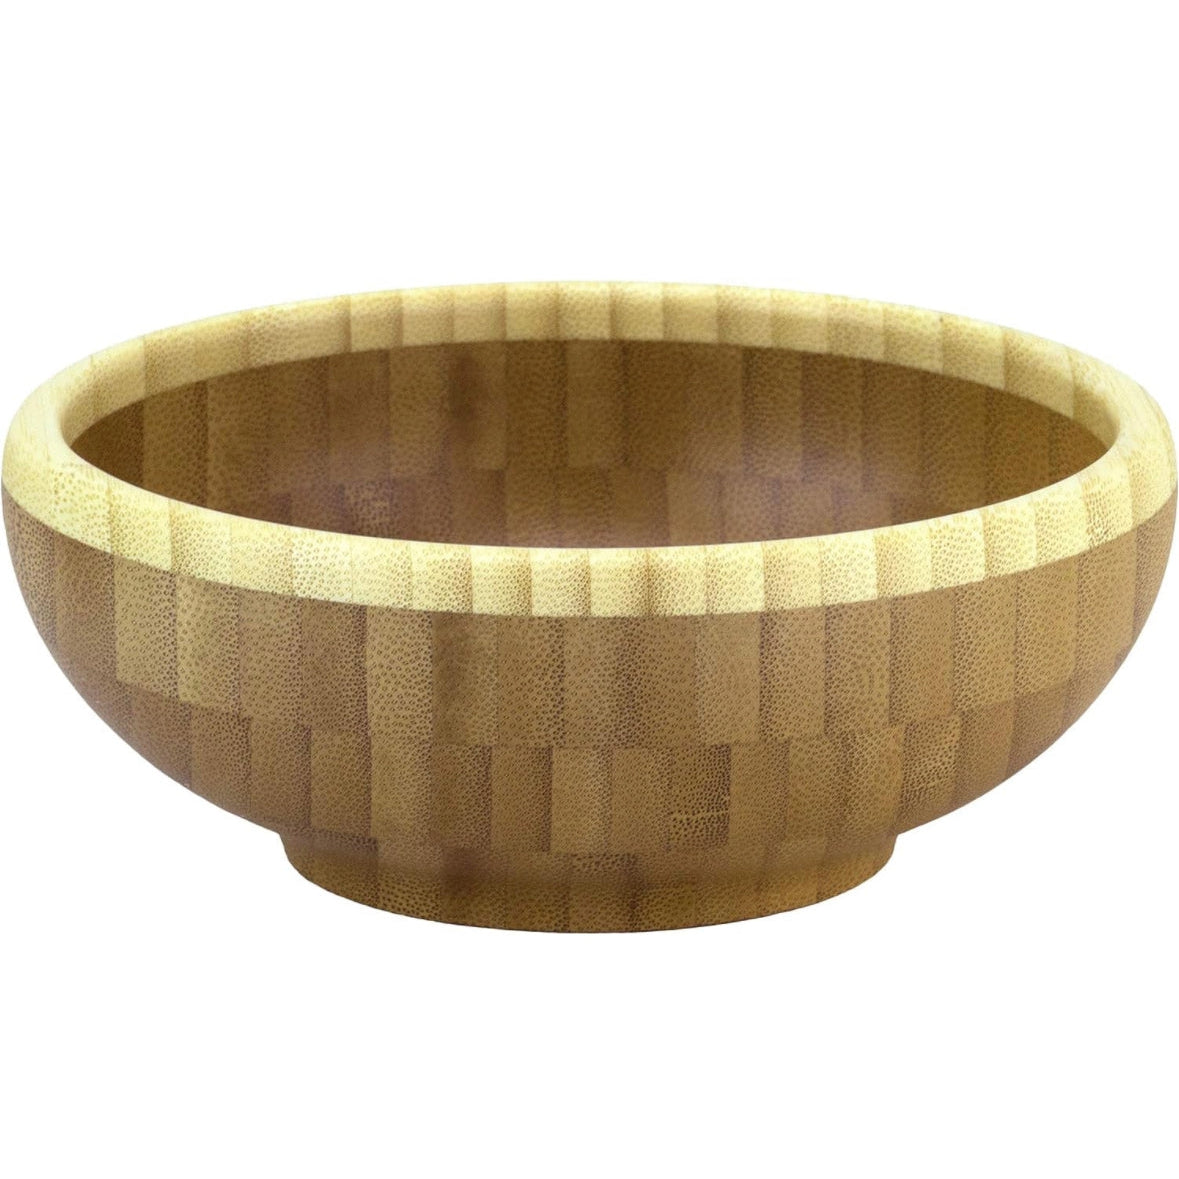 6” Bamboo Bowl